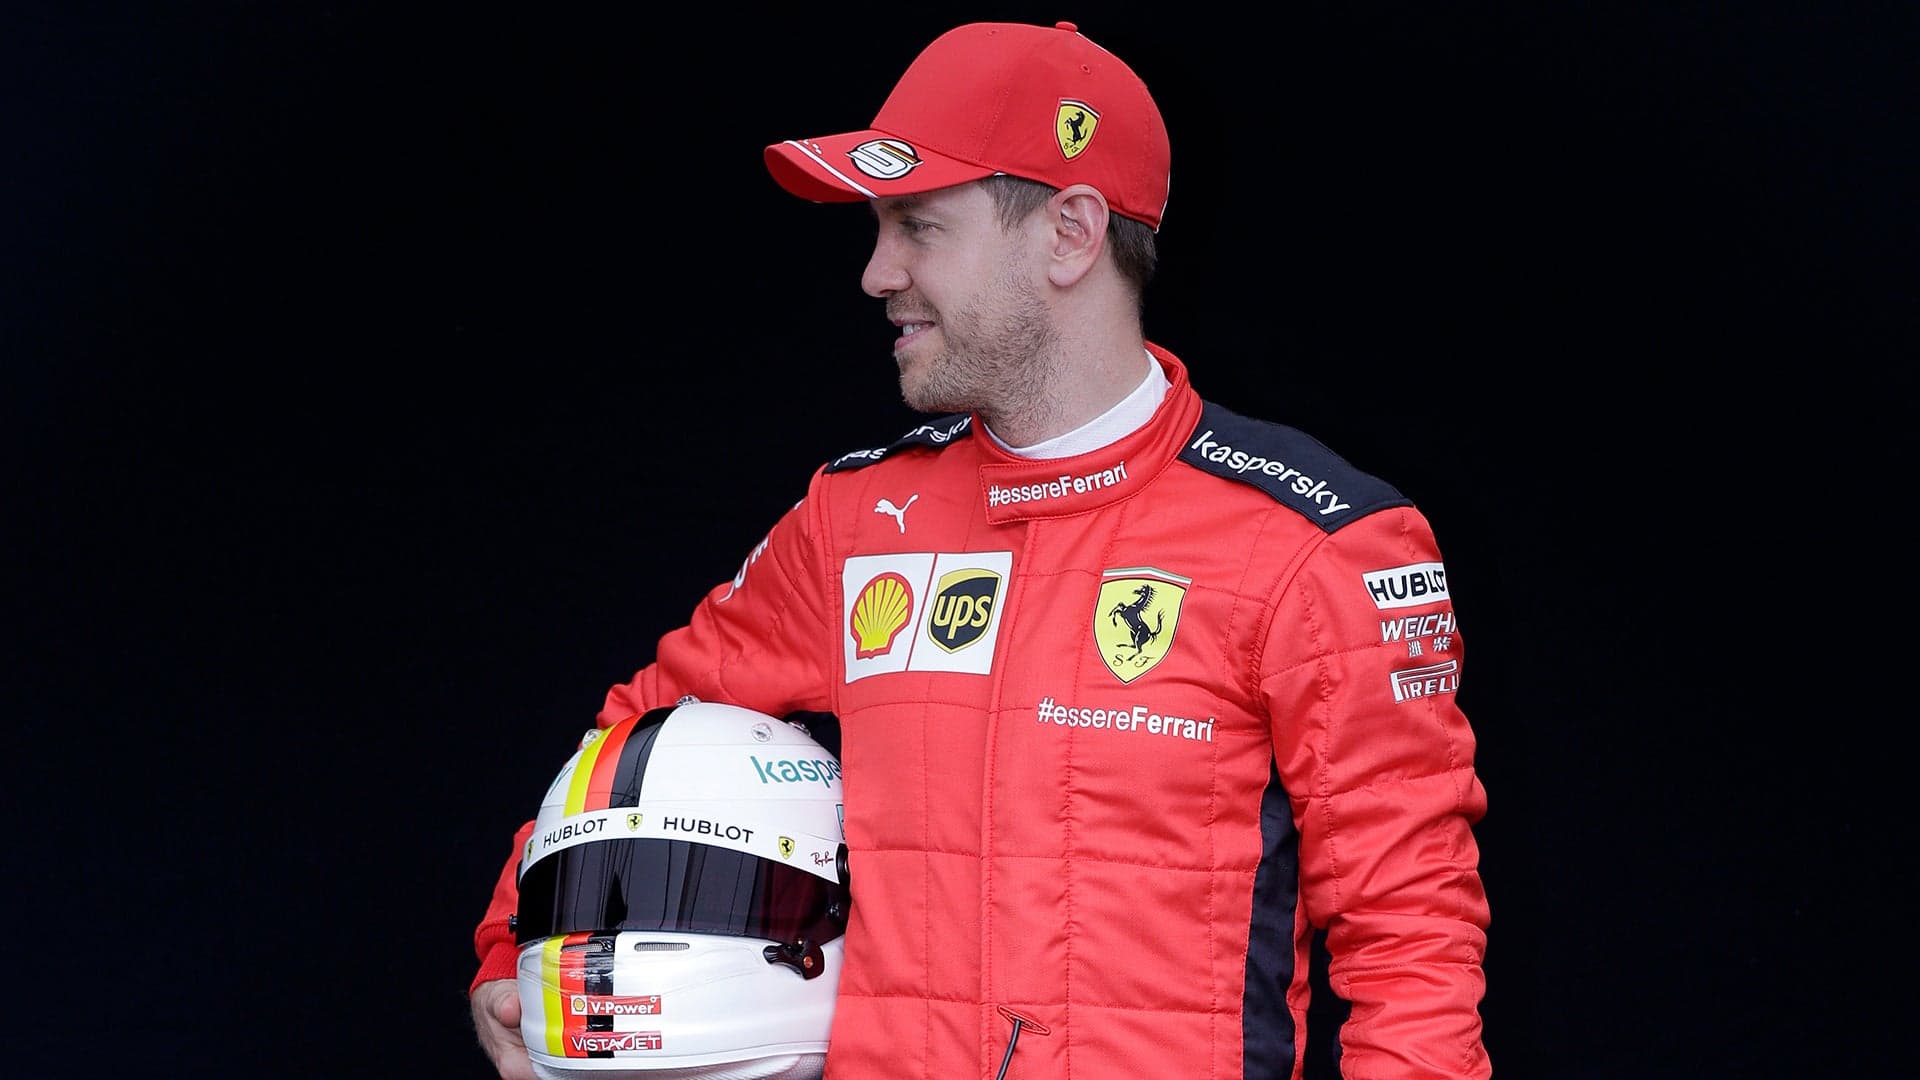 Sebastian Vettel Leaving Ferrari After 2020 F1 Season: Report